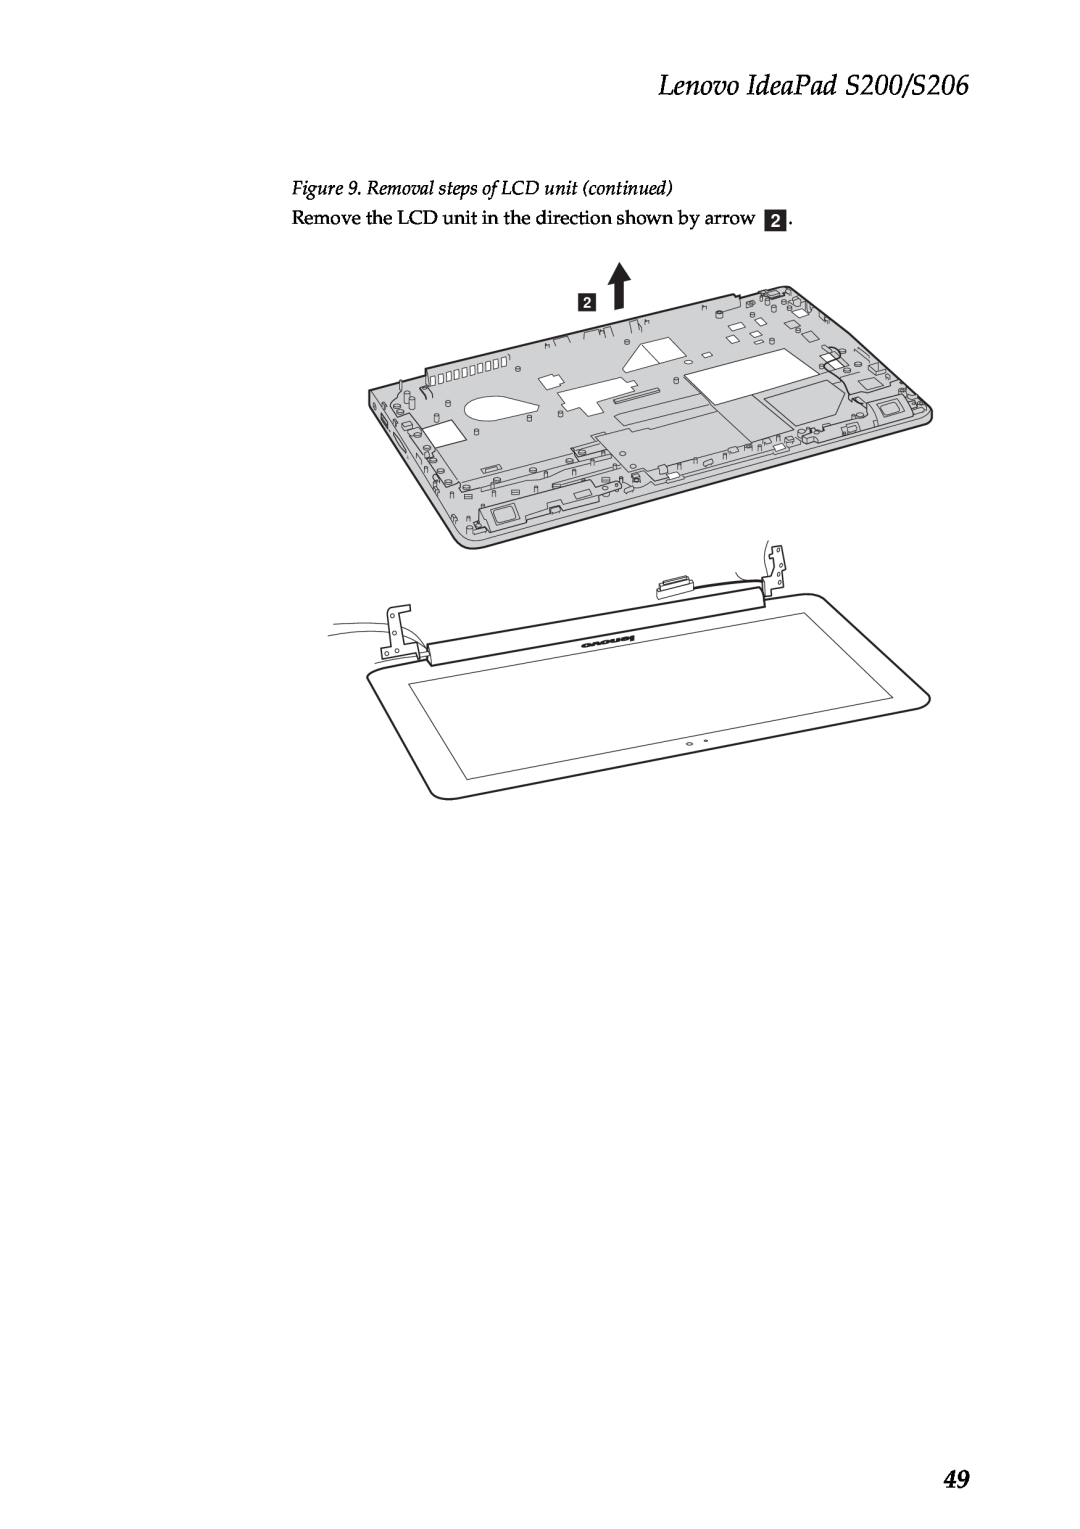 Lenovo manual Removal steps of LCD unit continued, Lenovo IdeaPad S200/S206 